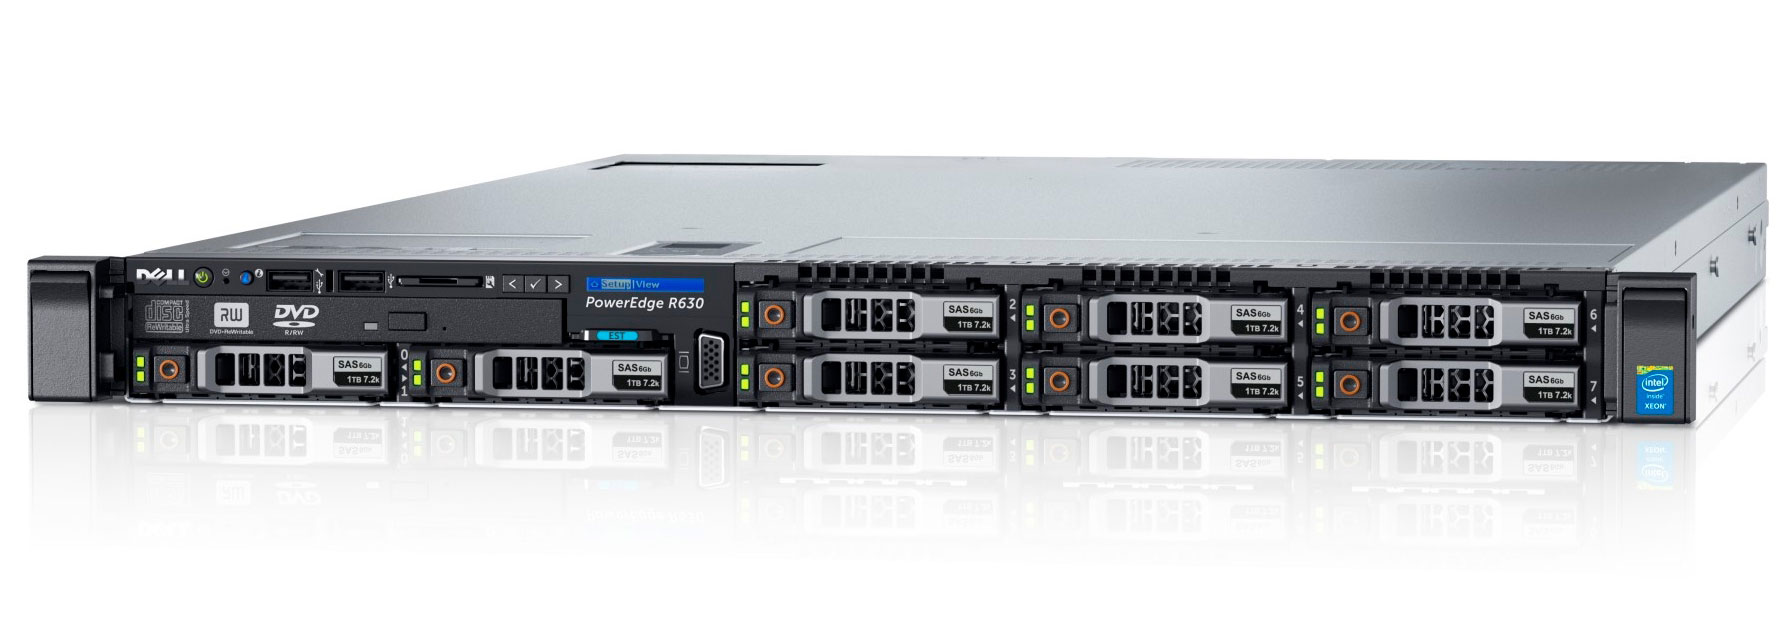 Подробное фото Сервер DELL PowerEdge R630 Xeon 2x E5-2620v3 64Gb 2133P DDR4 8x noHDD 2.5", SAS RAID Perc H730, 1024Mb, DVD, 2*PSU